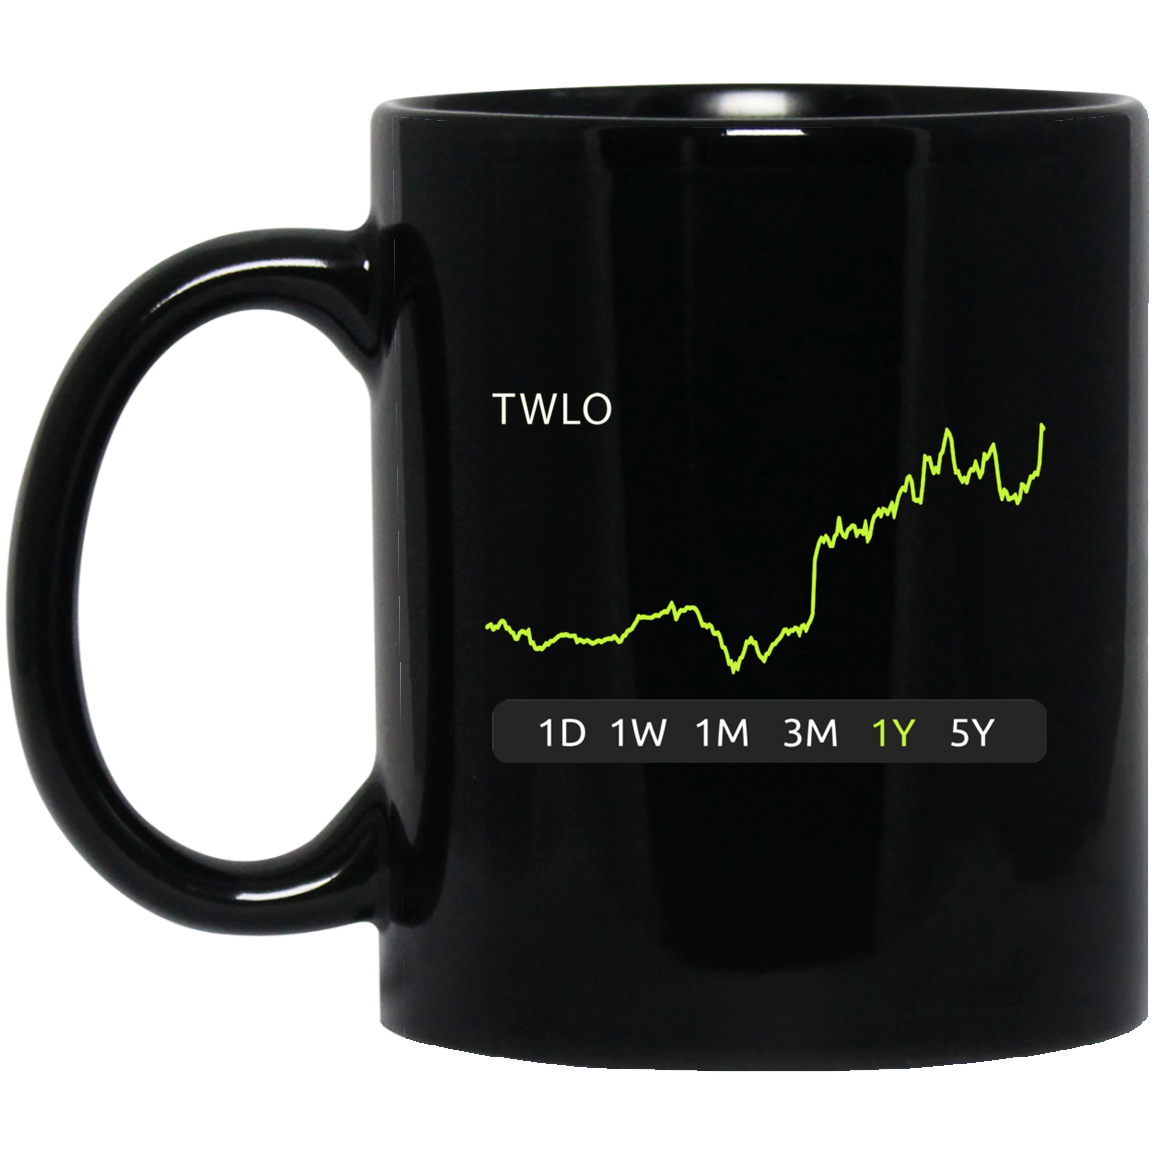 TWLO Stock 1y  Mug